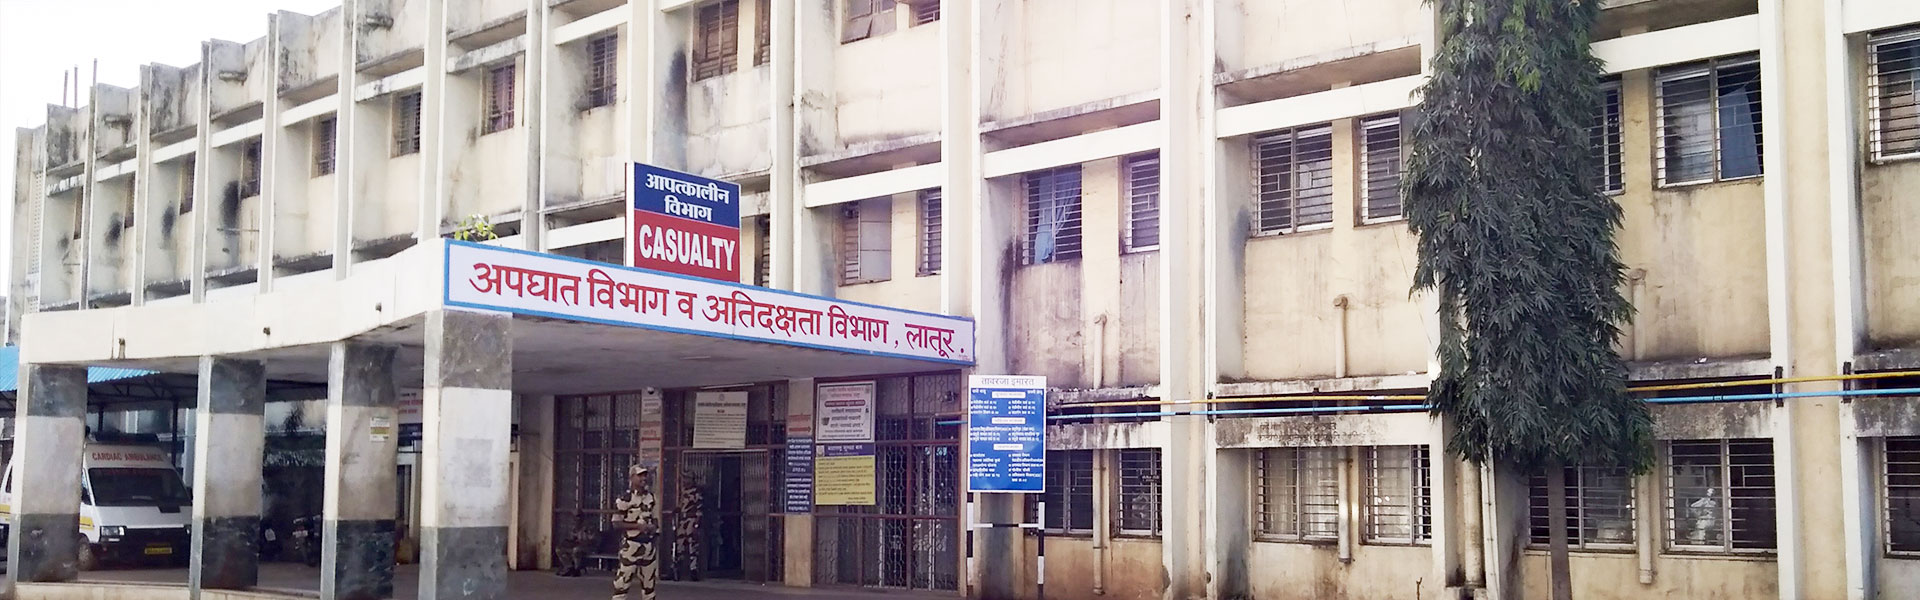 Govt Medical College And Hospital, Latur|Hospitals|Medical Services